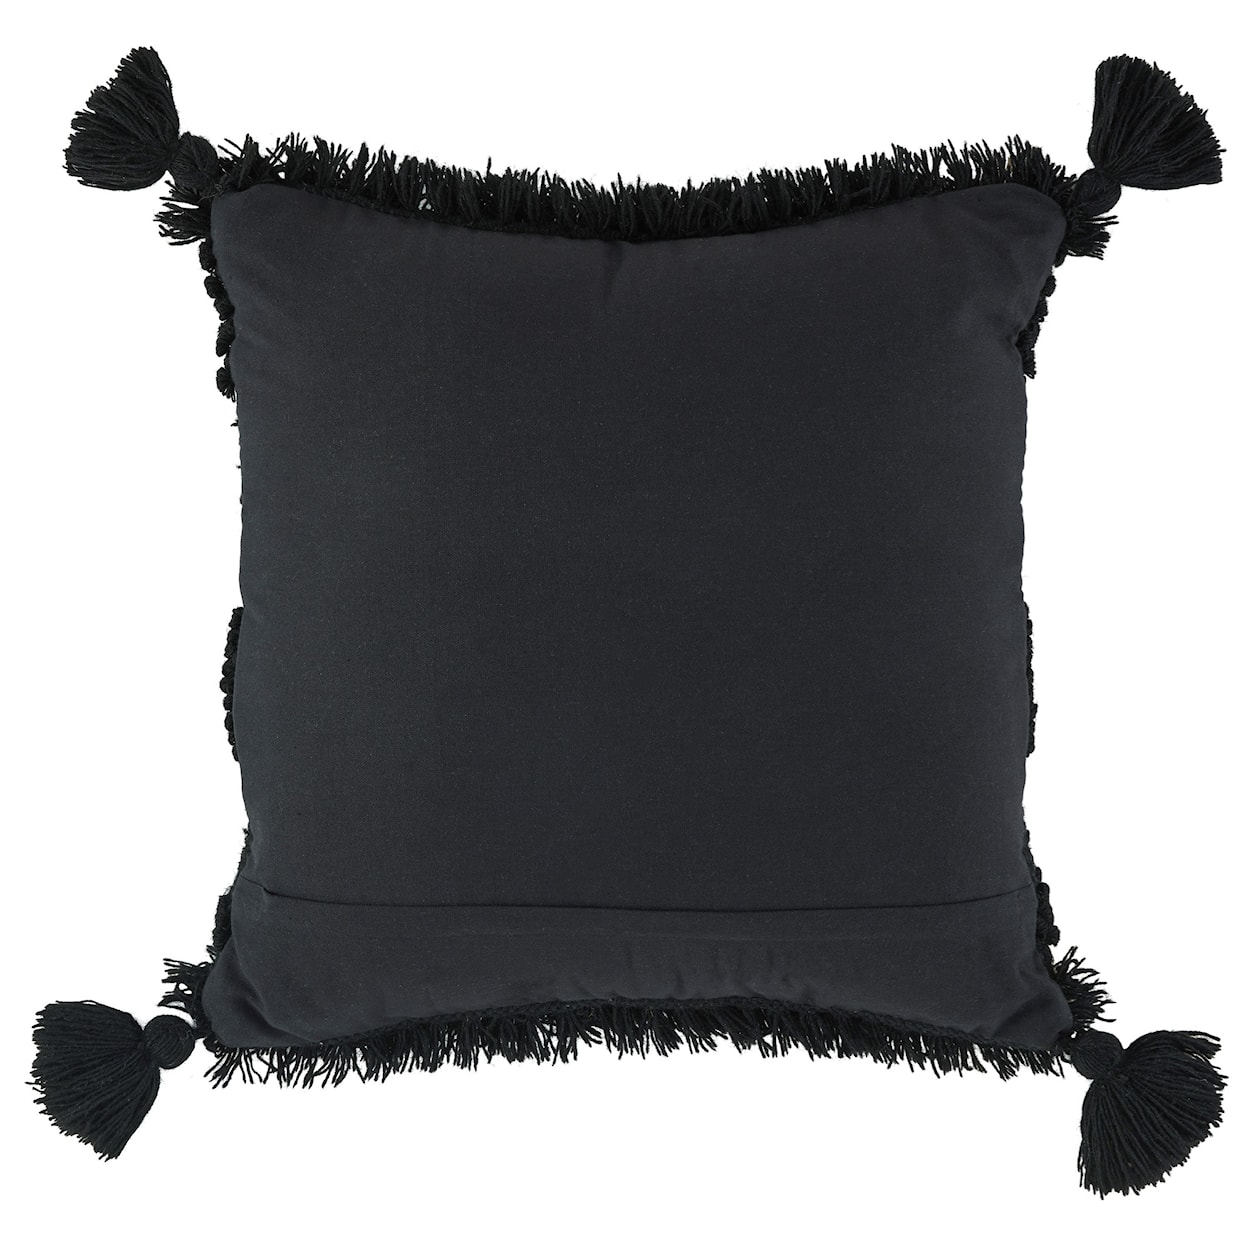 Ashley Furniture Signature Design Pillows Mordechai Black Pillow